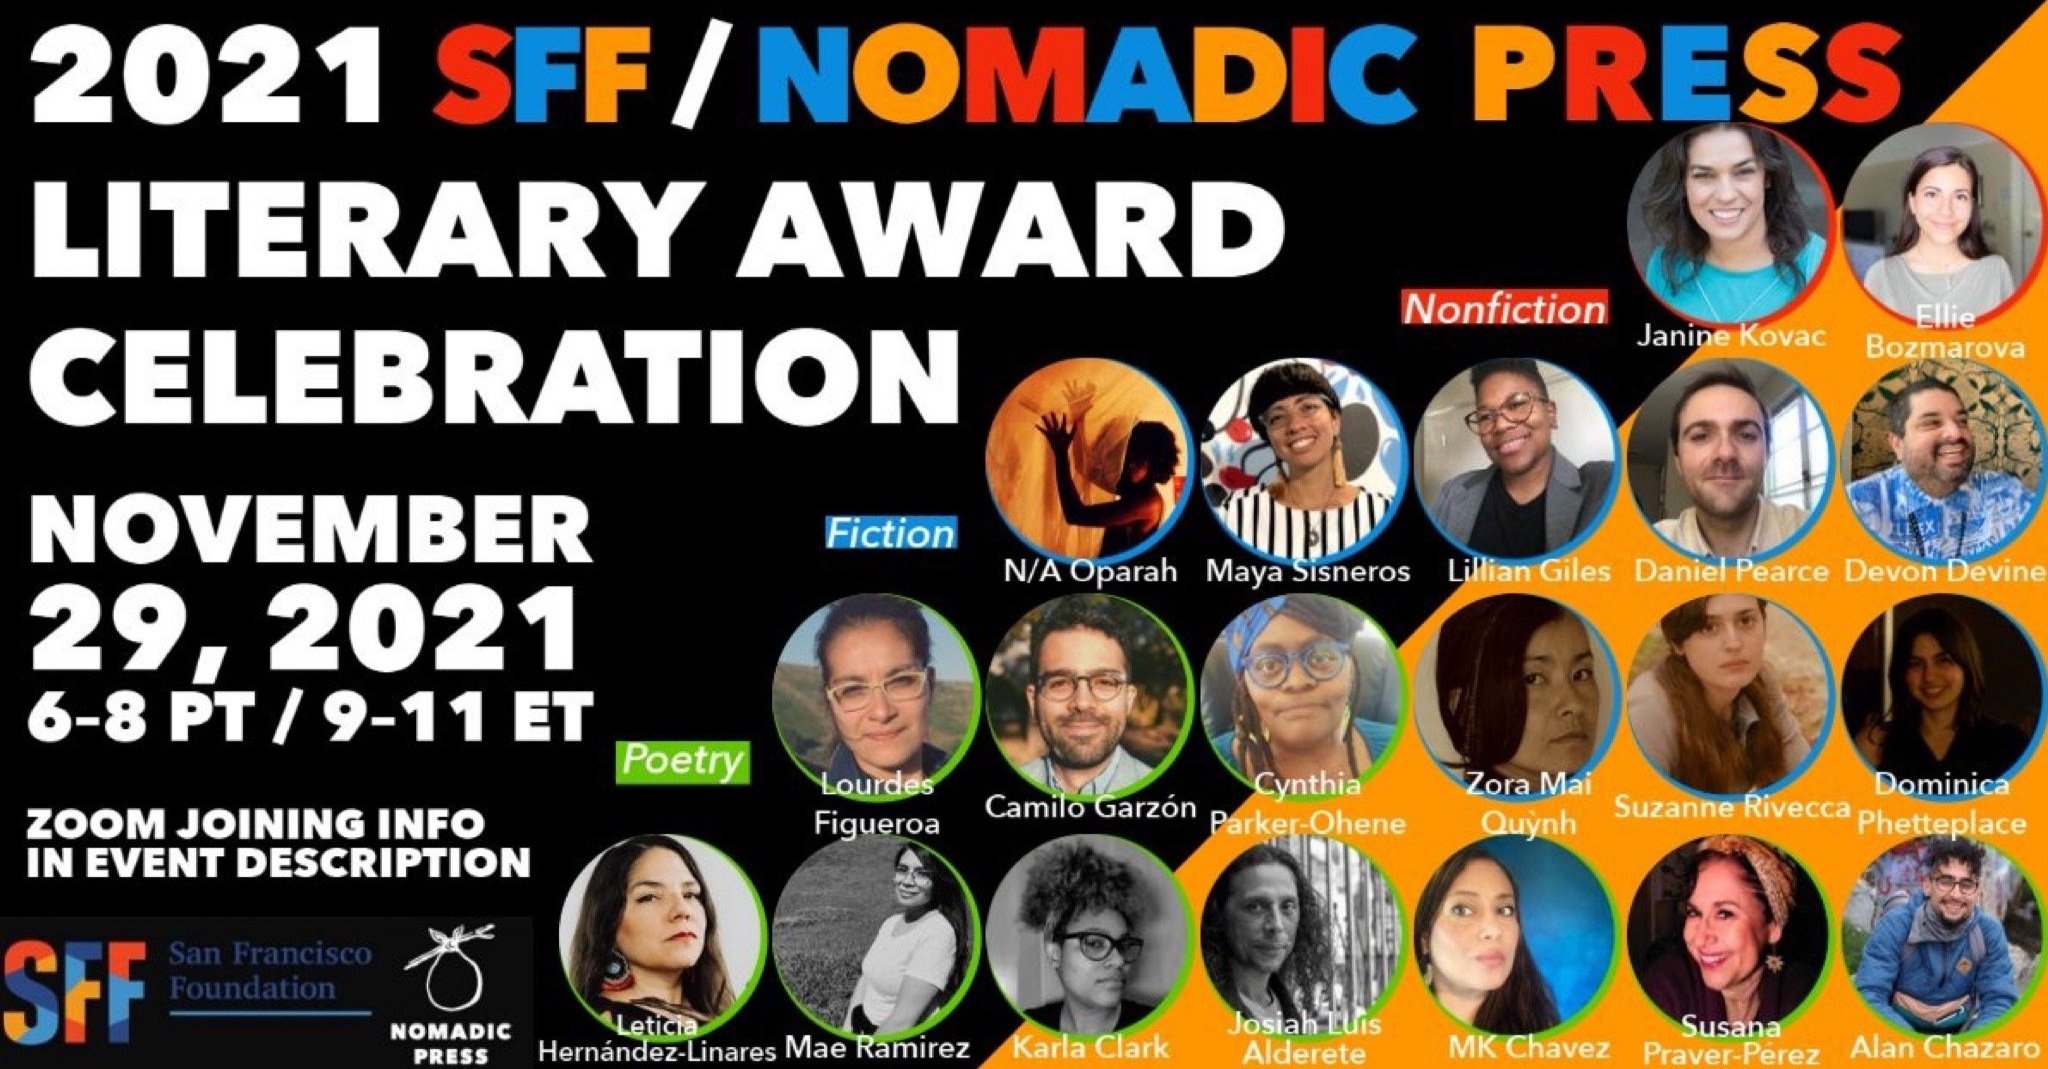 San Francisco Foundation / Nomadic Press Literary Award